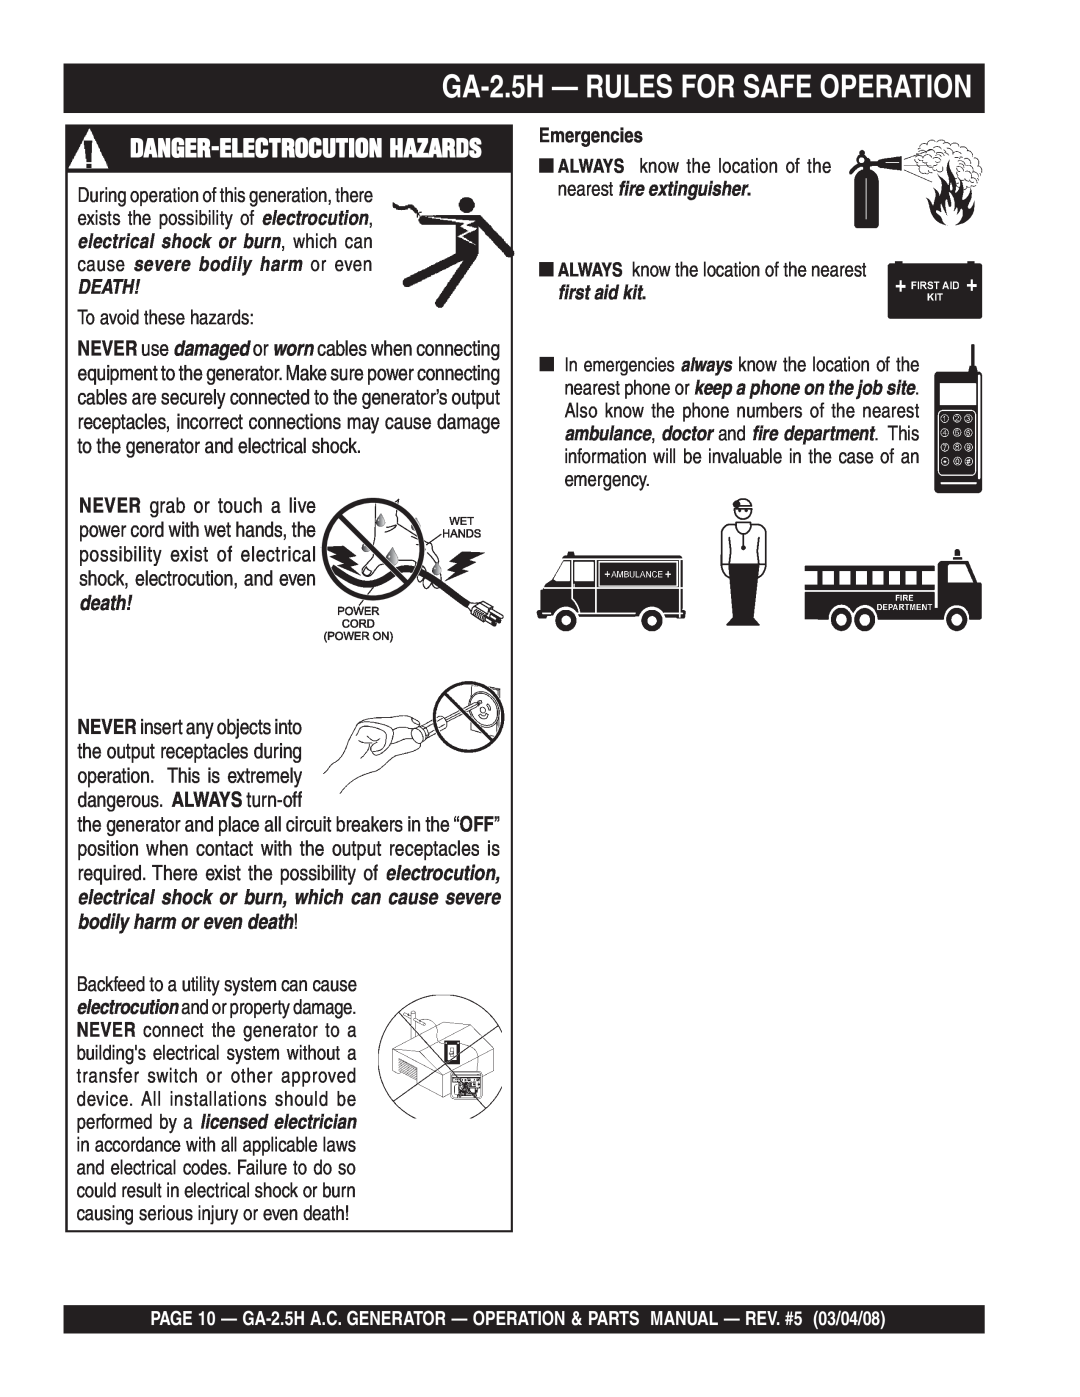 Multiquip manual GA-2.5H - RULES FOR SAFE OPERATION, Danger-Electrocution Hazards, Death, Emergencies 